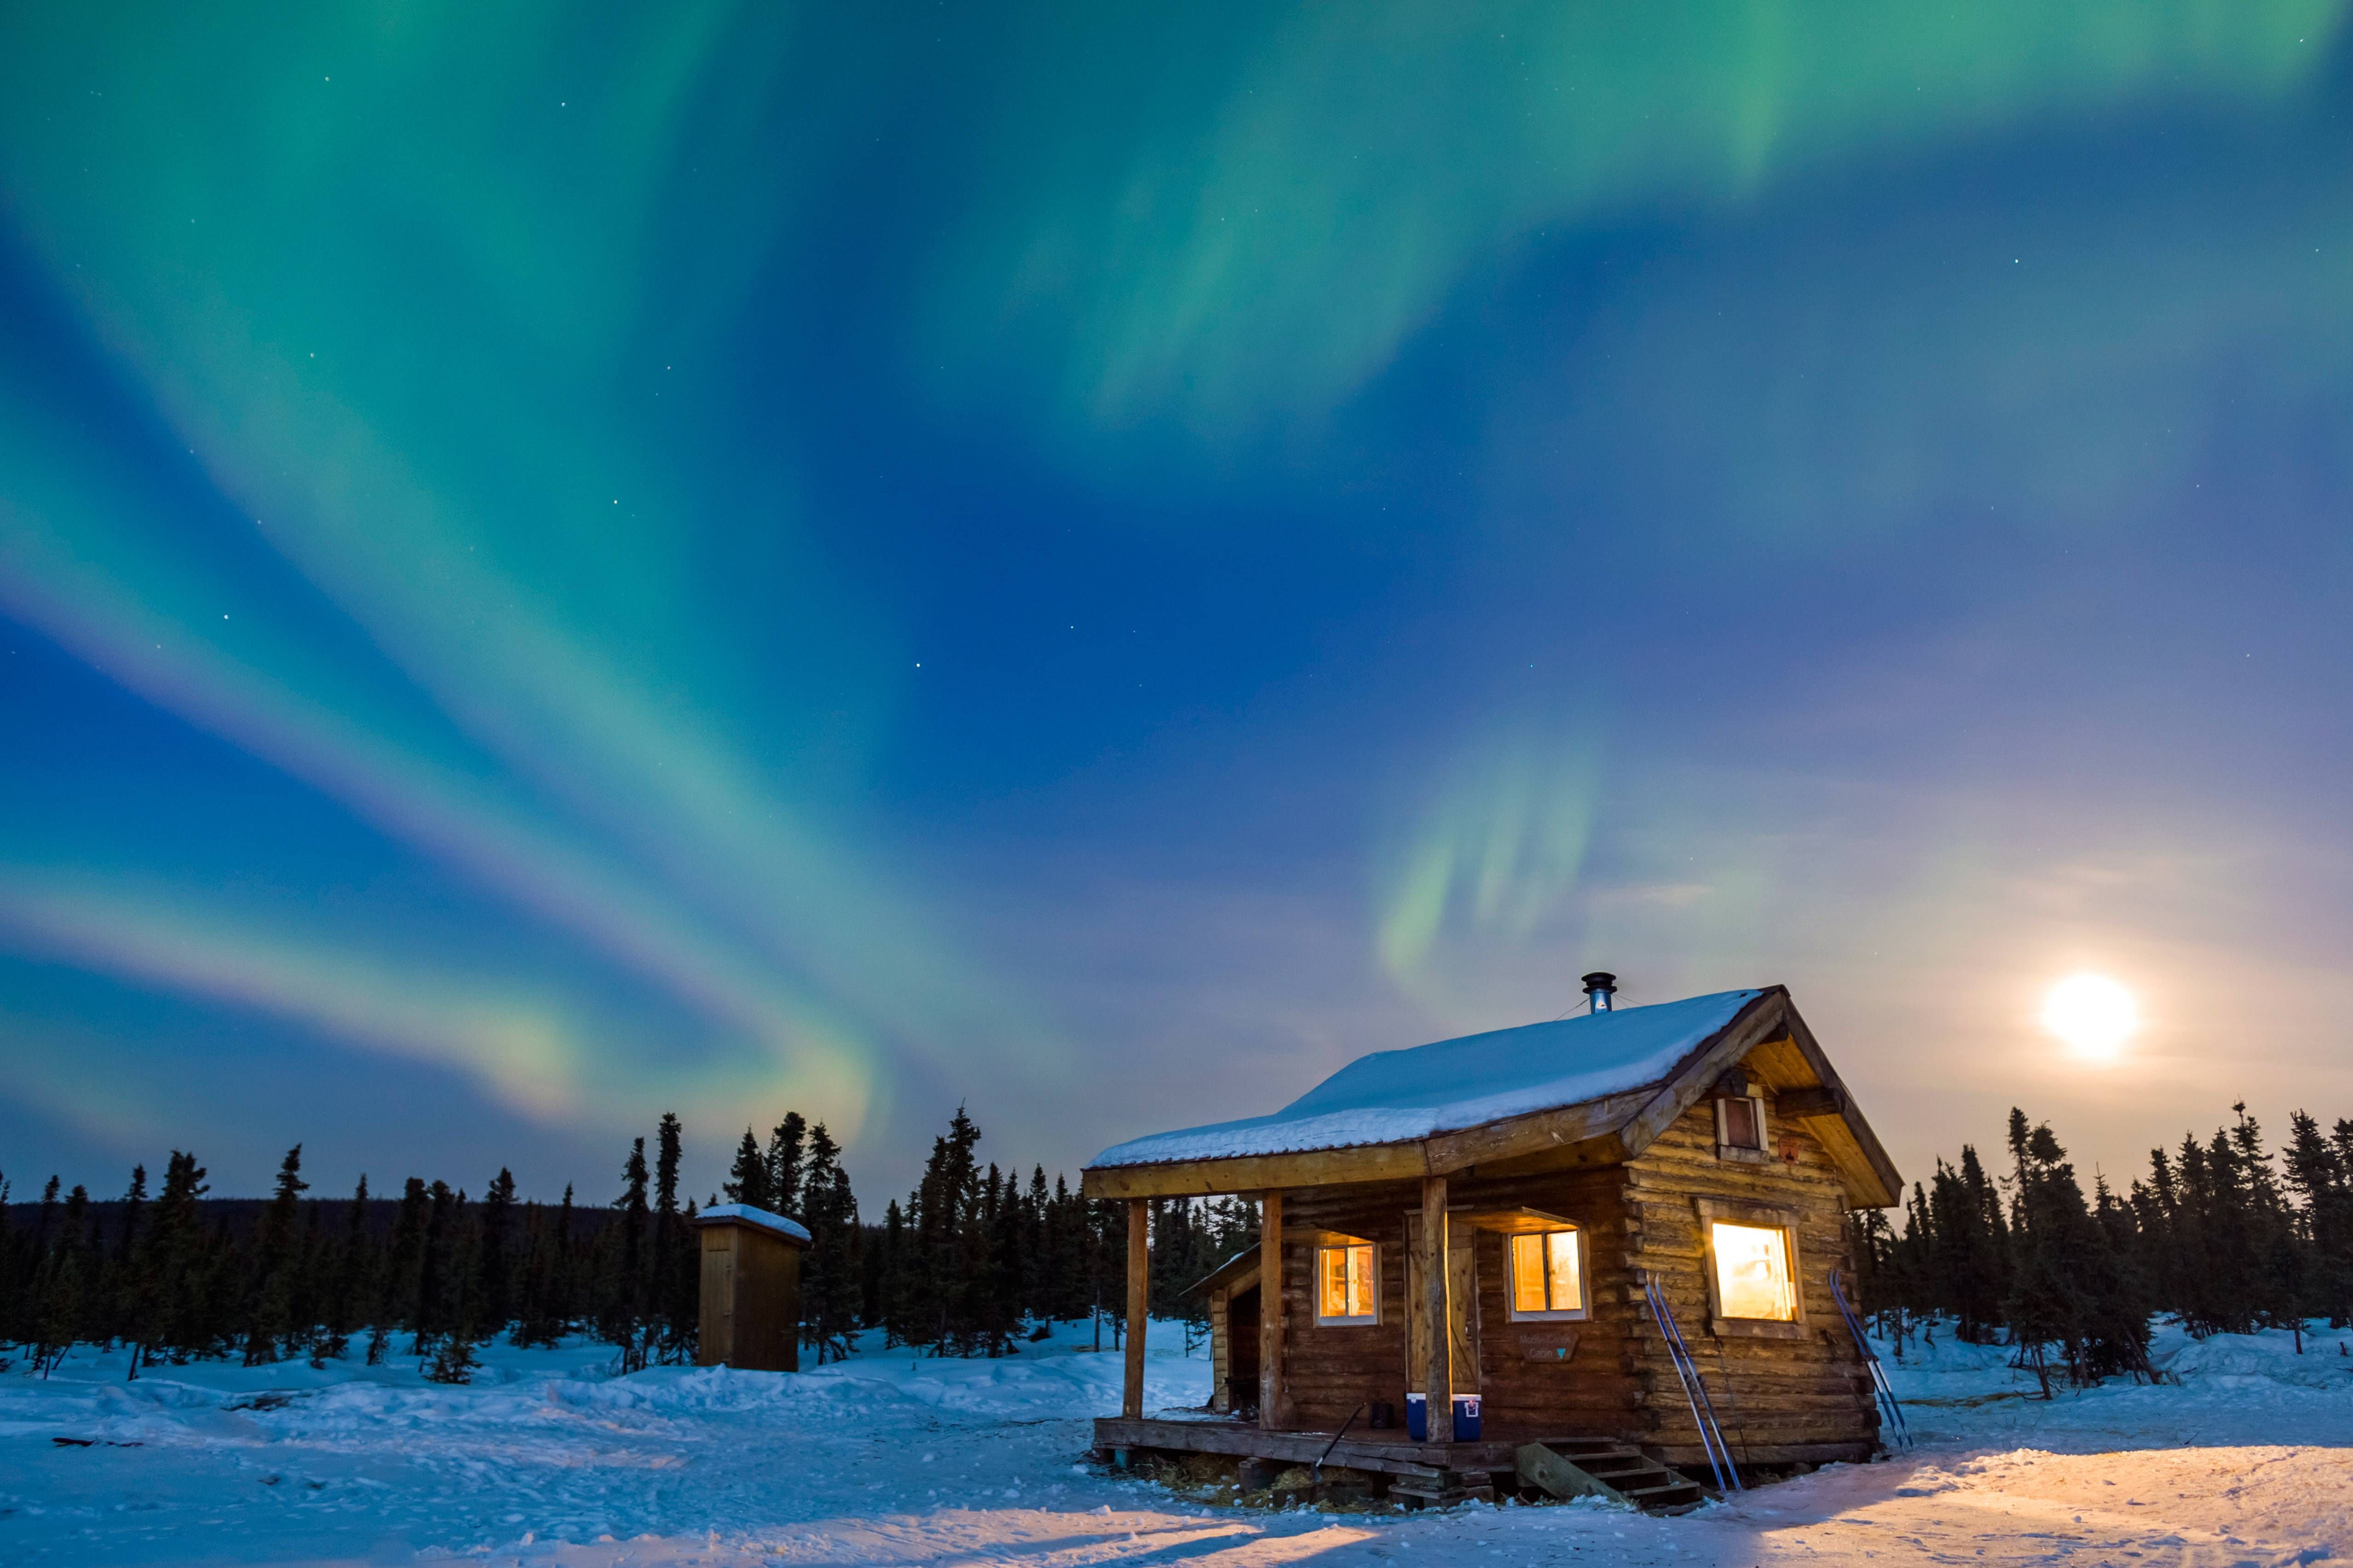 Alaska cabin & Northern lights 4k Ultra HD Wallpaper and Background